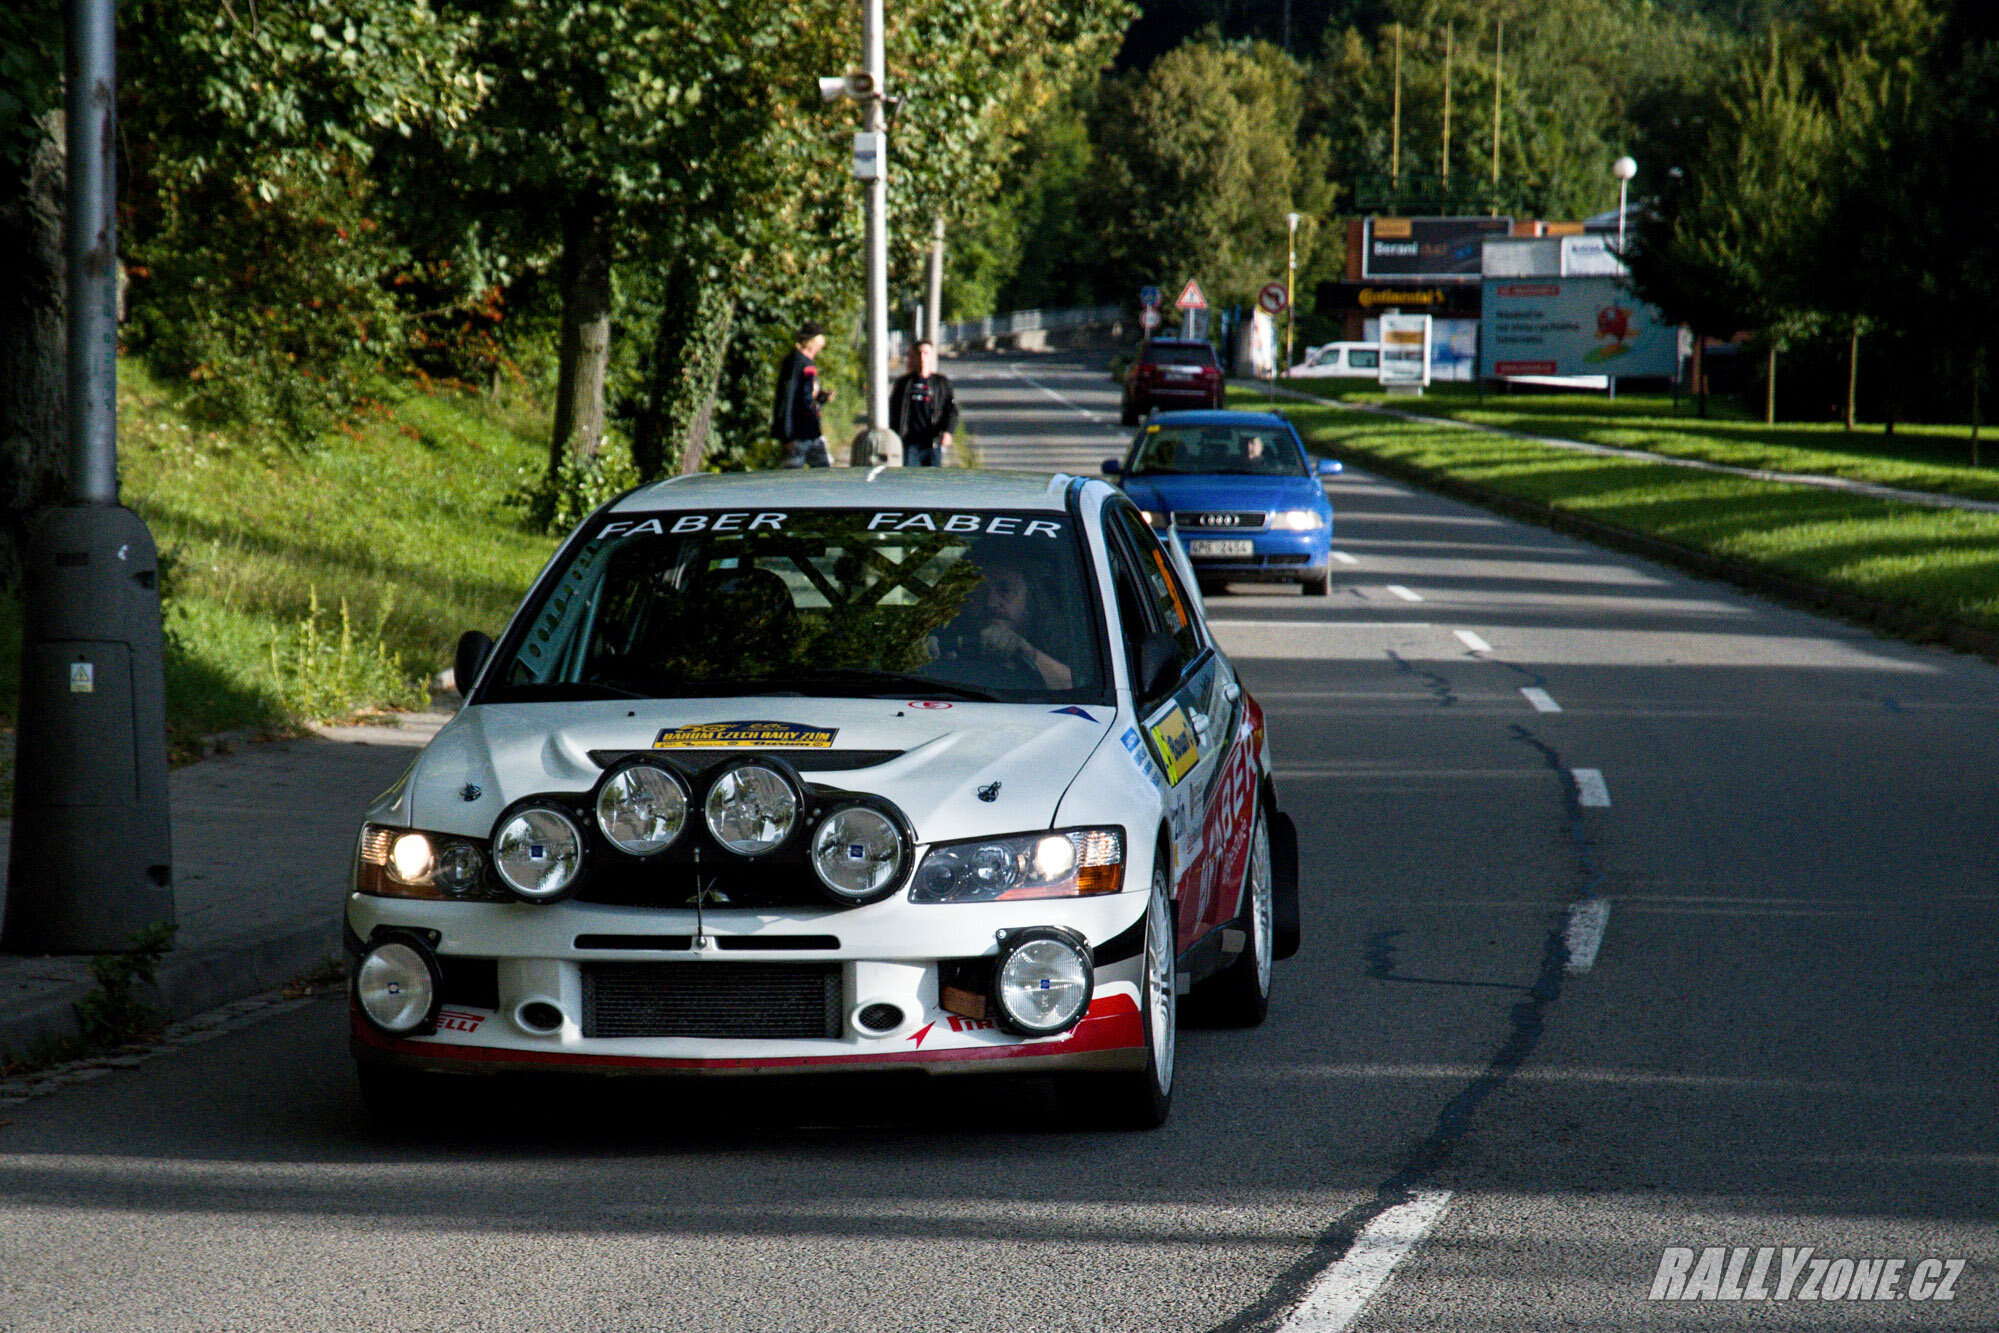 Barum Czech Rally Zlín (CZE)